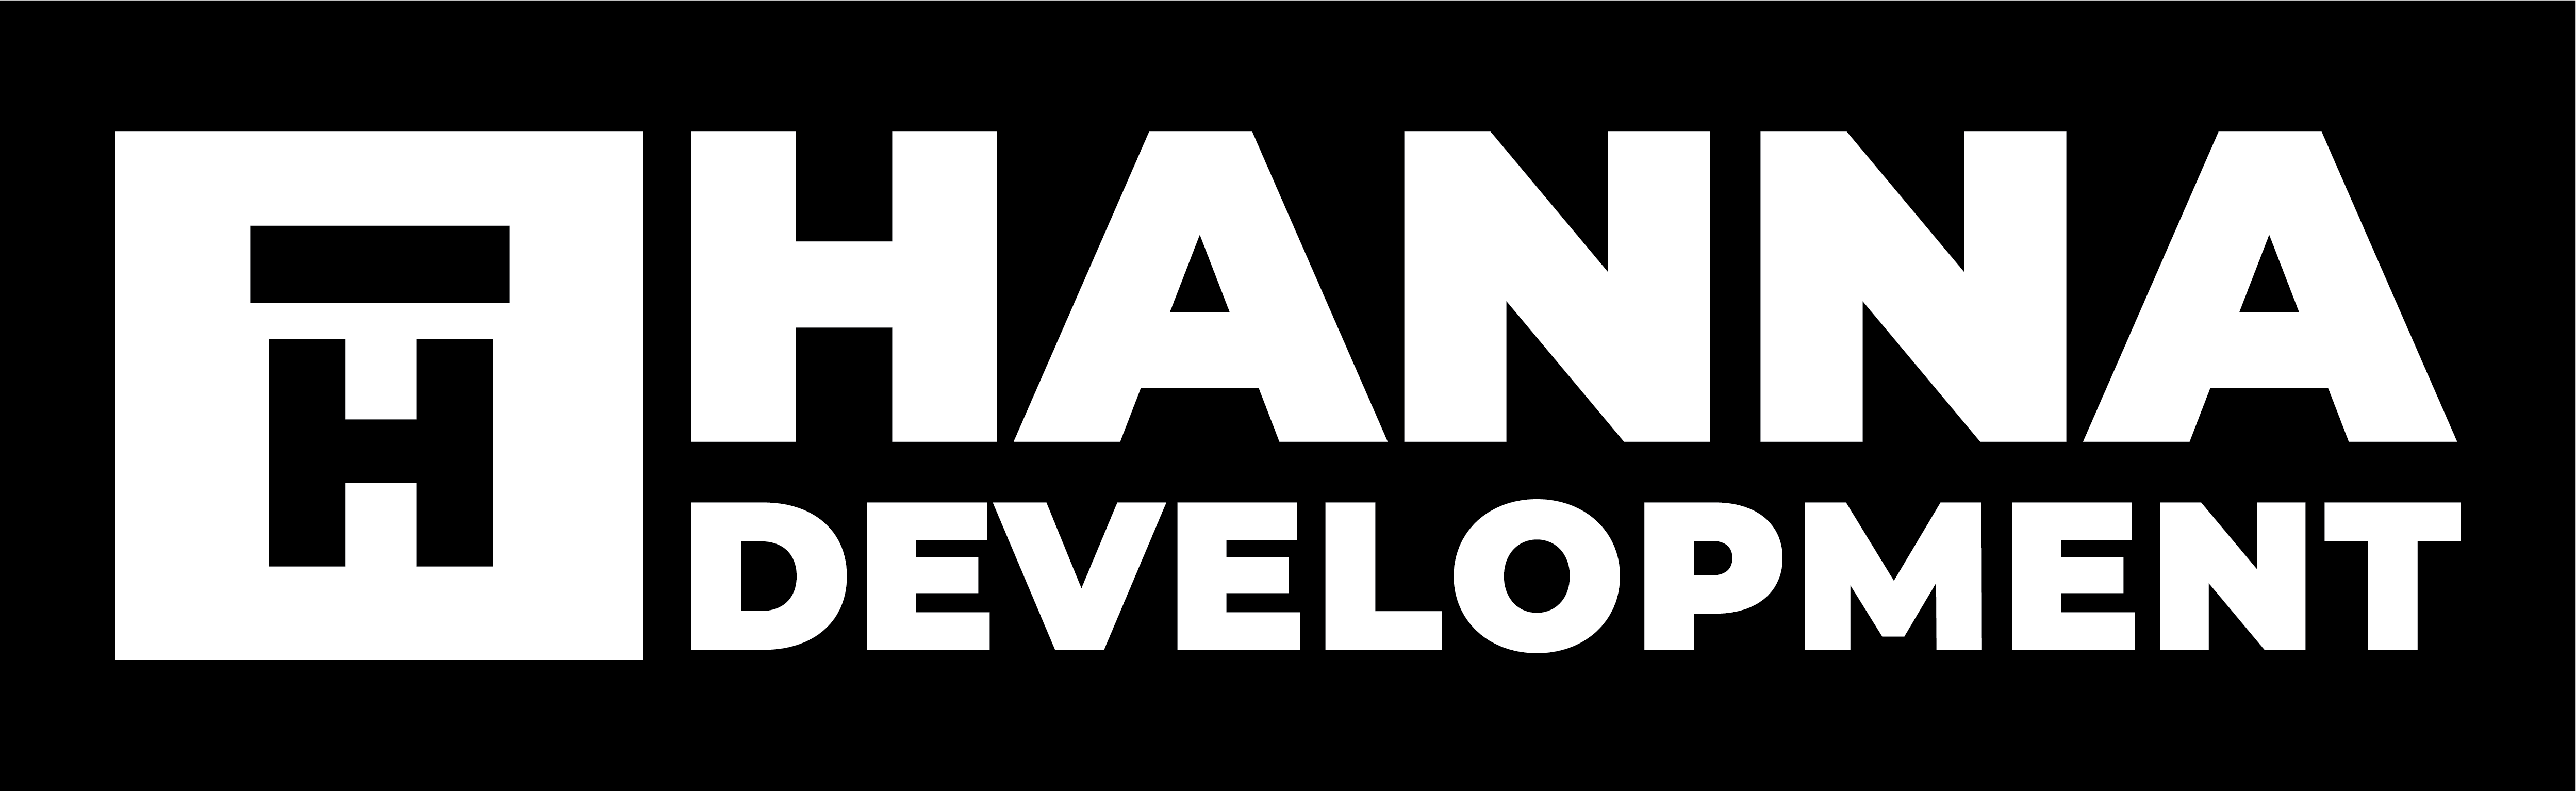 Developer South Texas Logo - Hanna Development